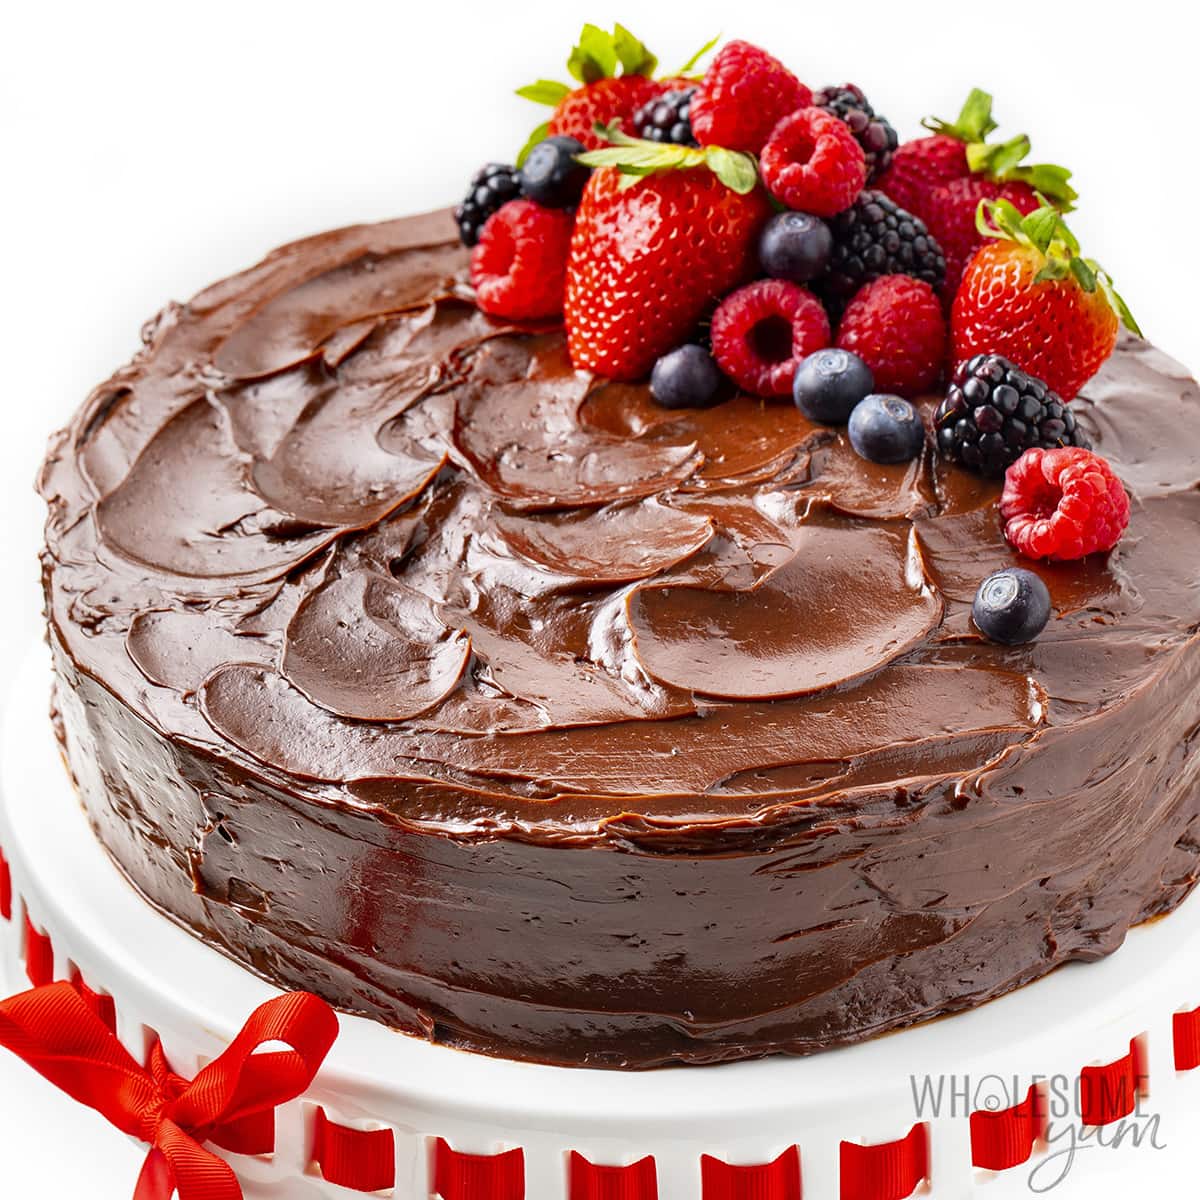 Decorated keto chocolate cake recipe with berries.